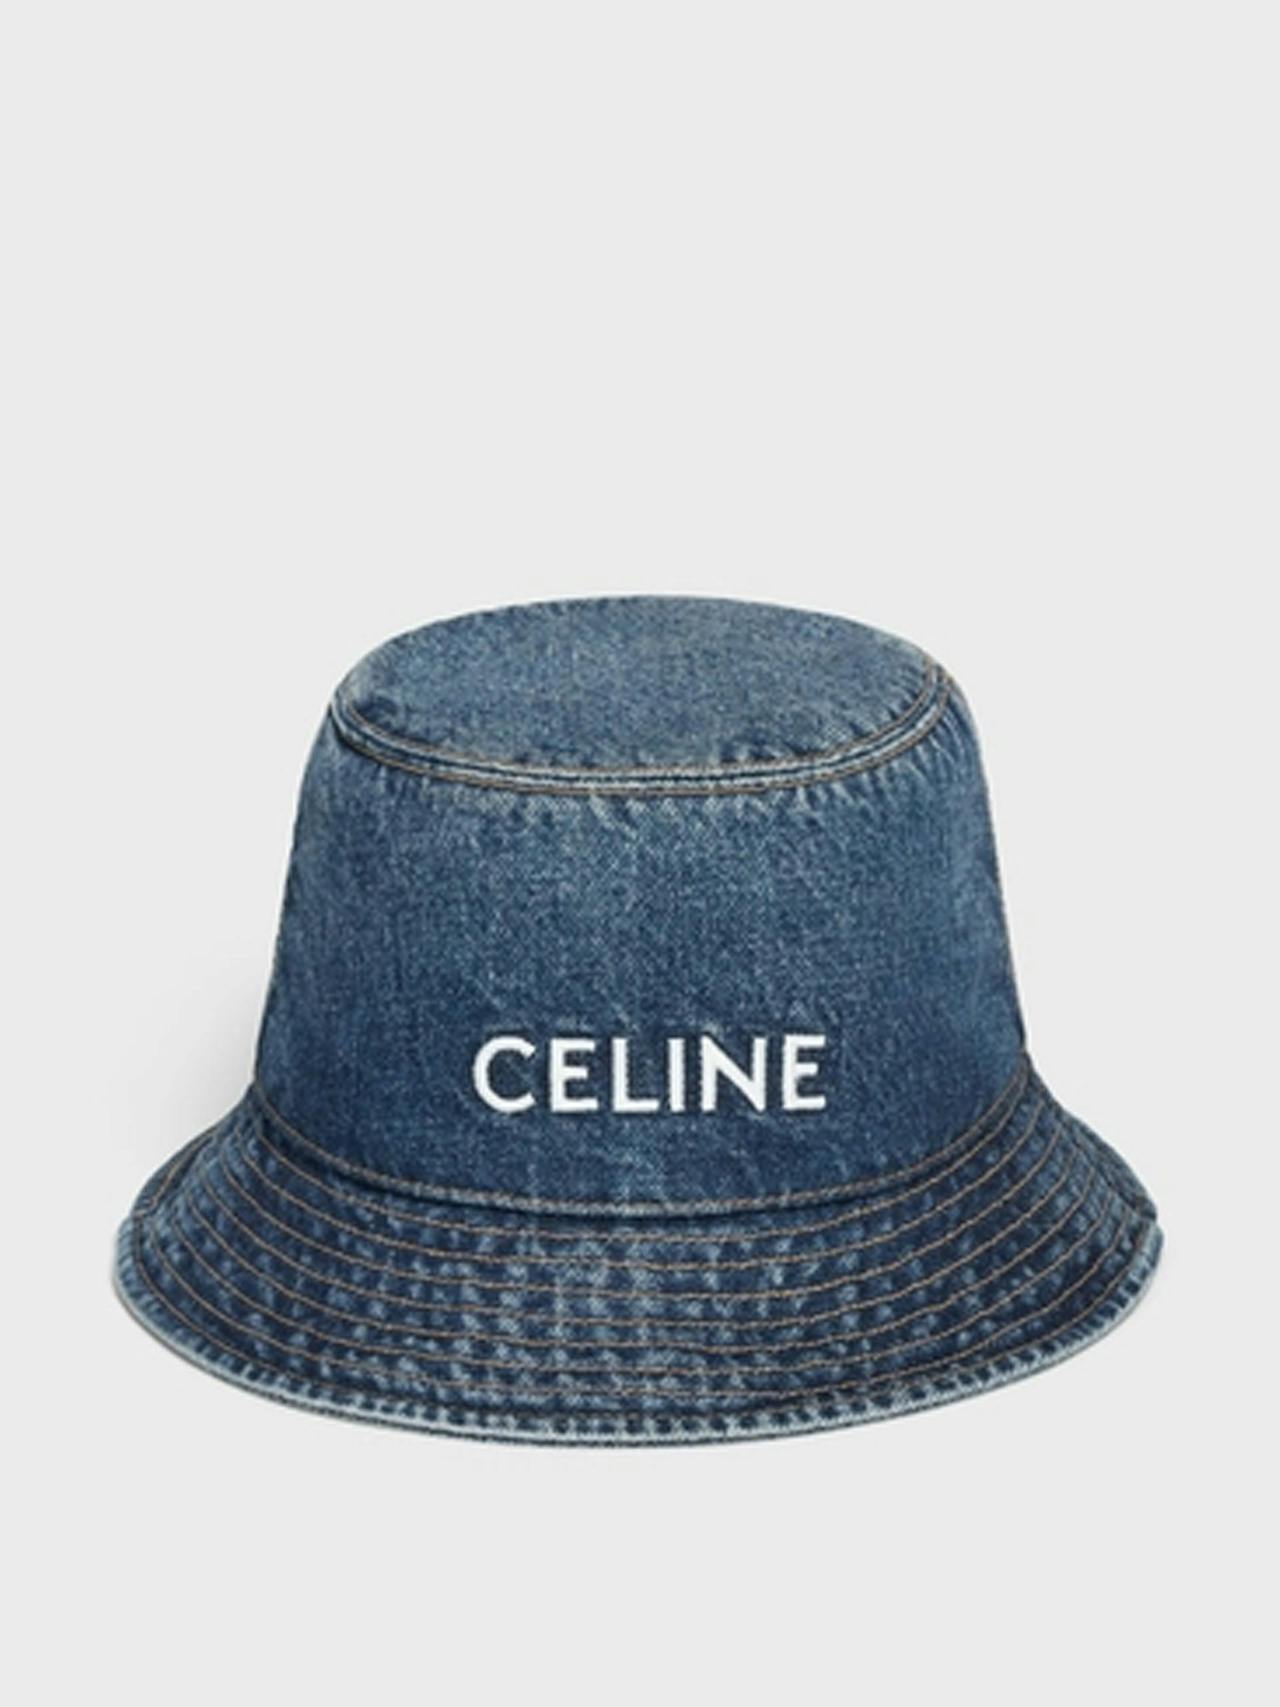 Celine bucket hat in union wash denim